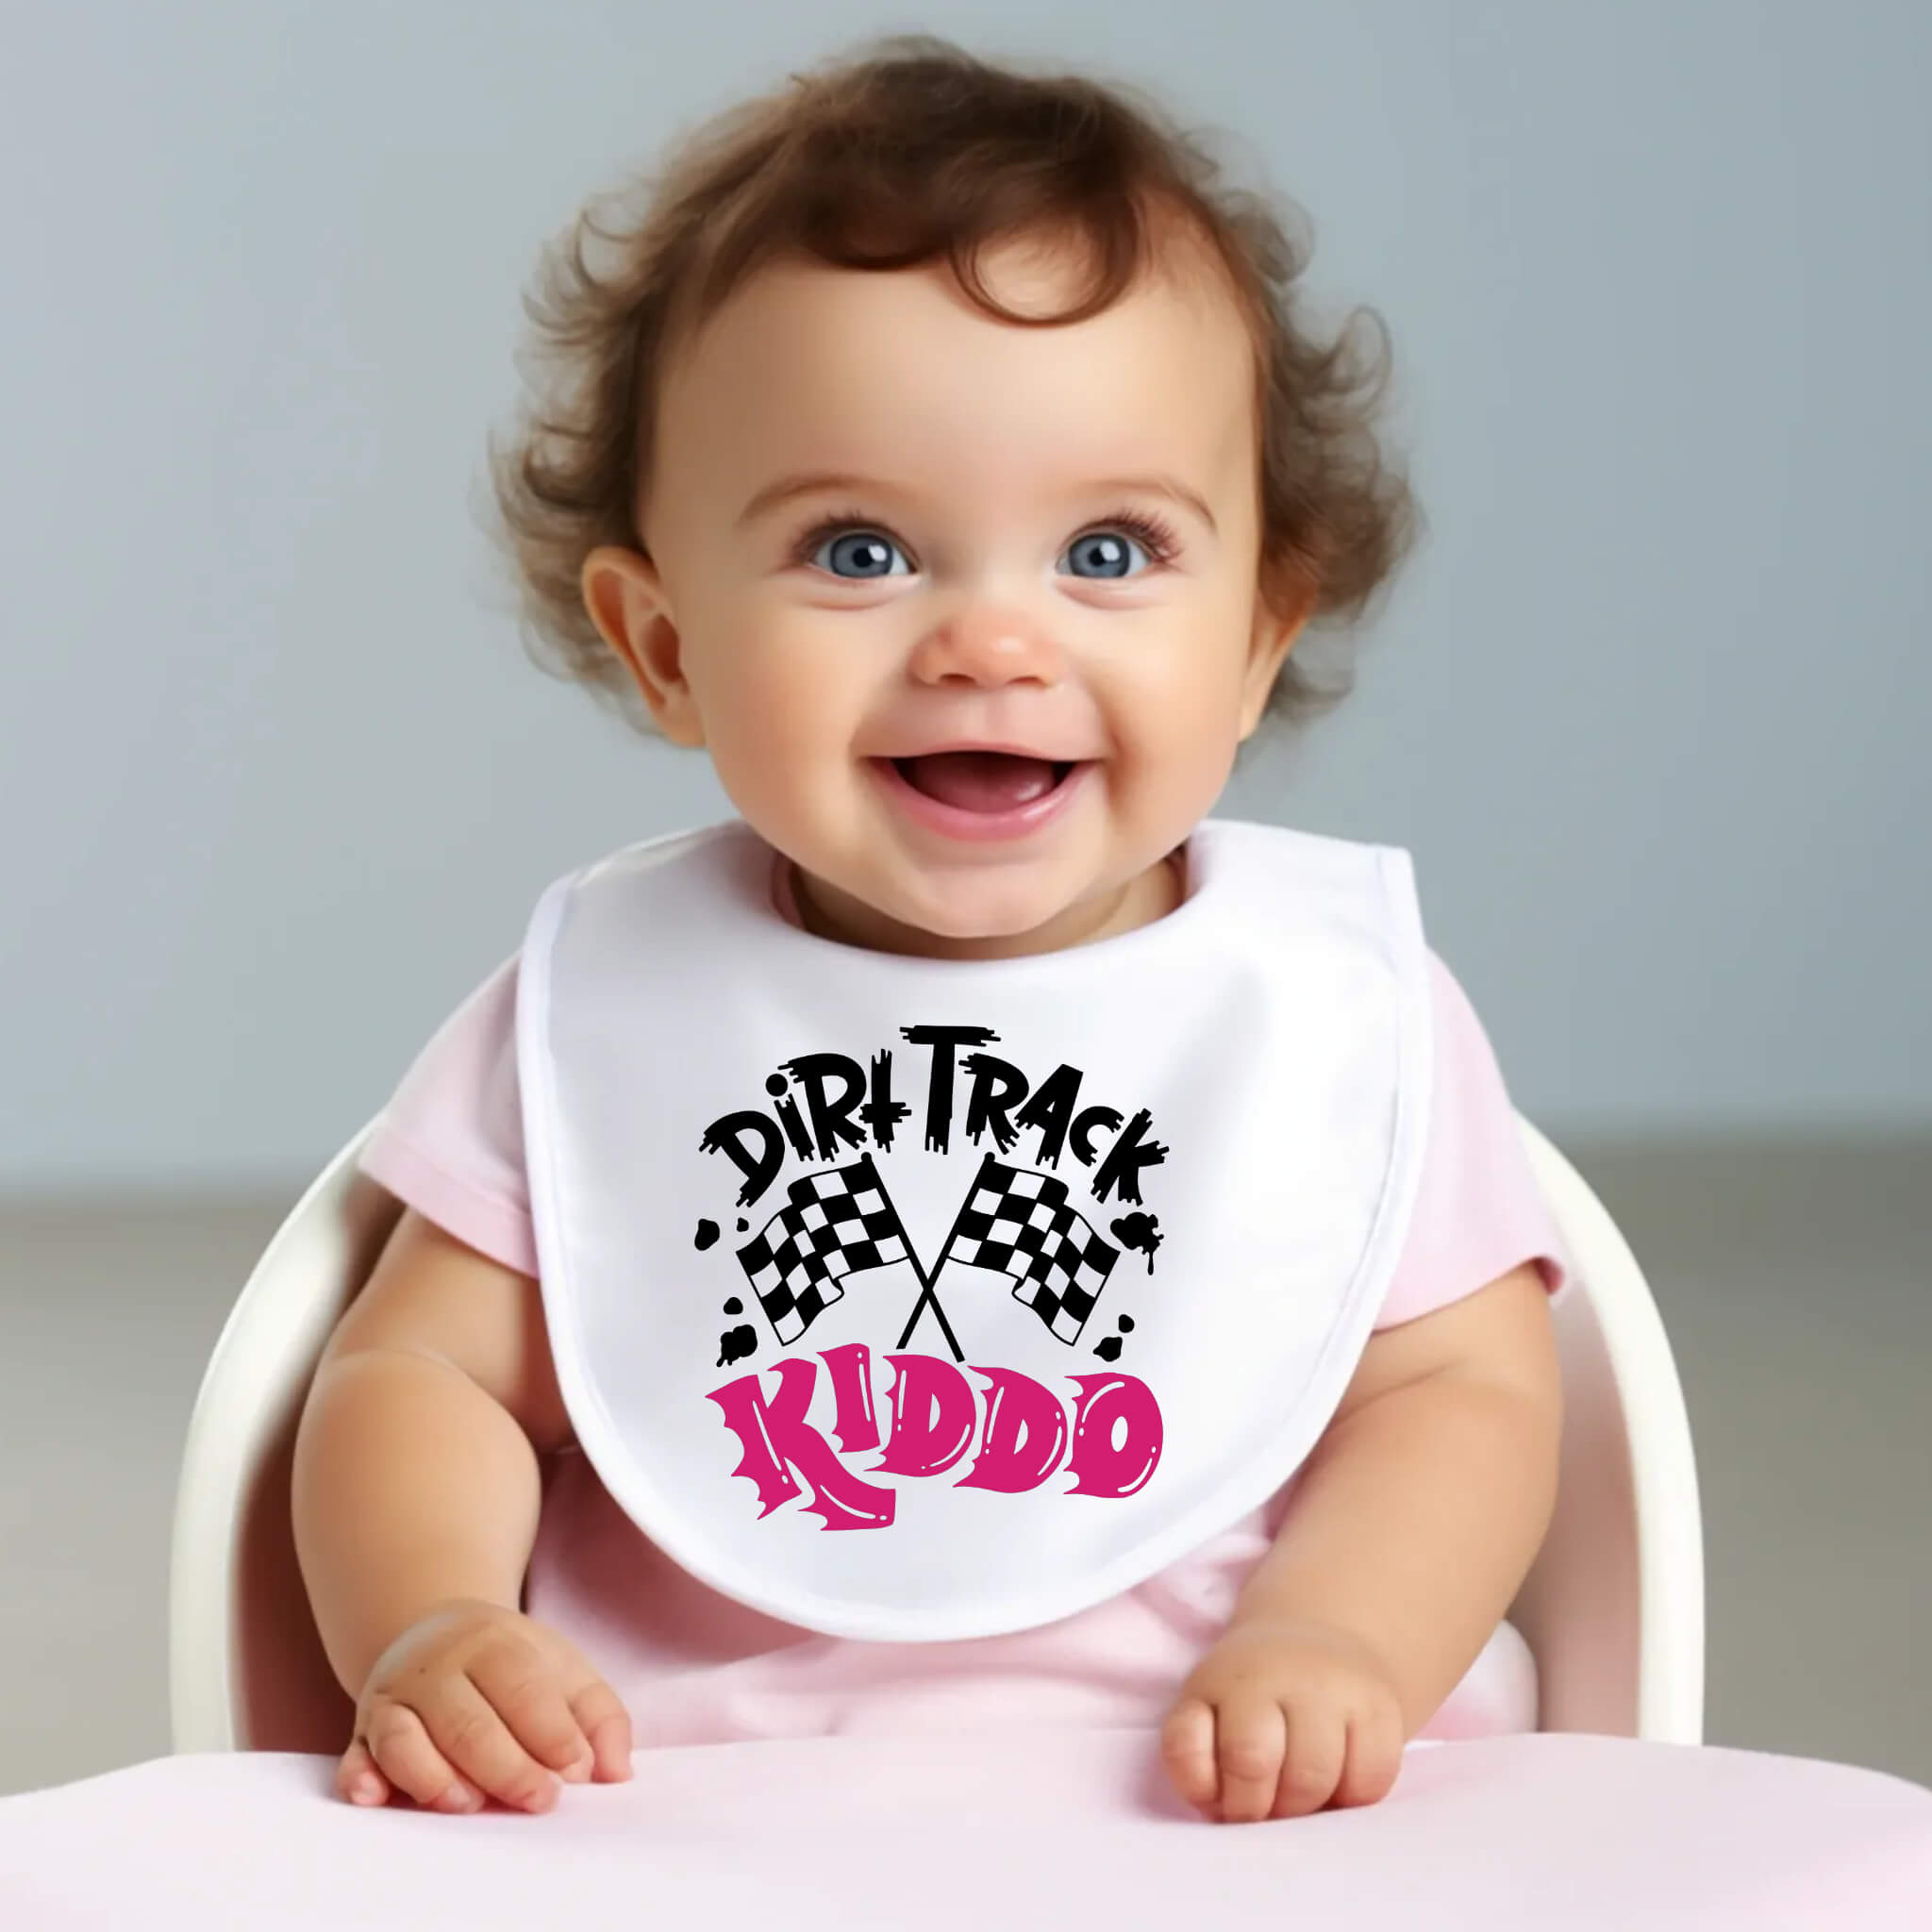 Racing - Dirt Track Kiddo Customizable Baby Bib One of A Kind Baby Shower Gift